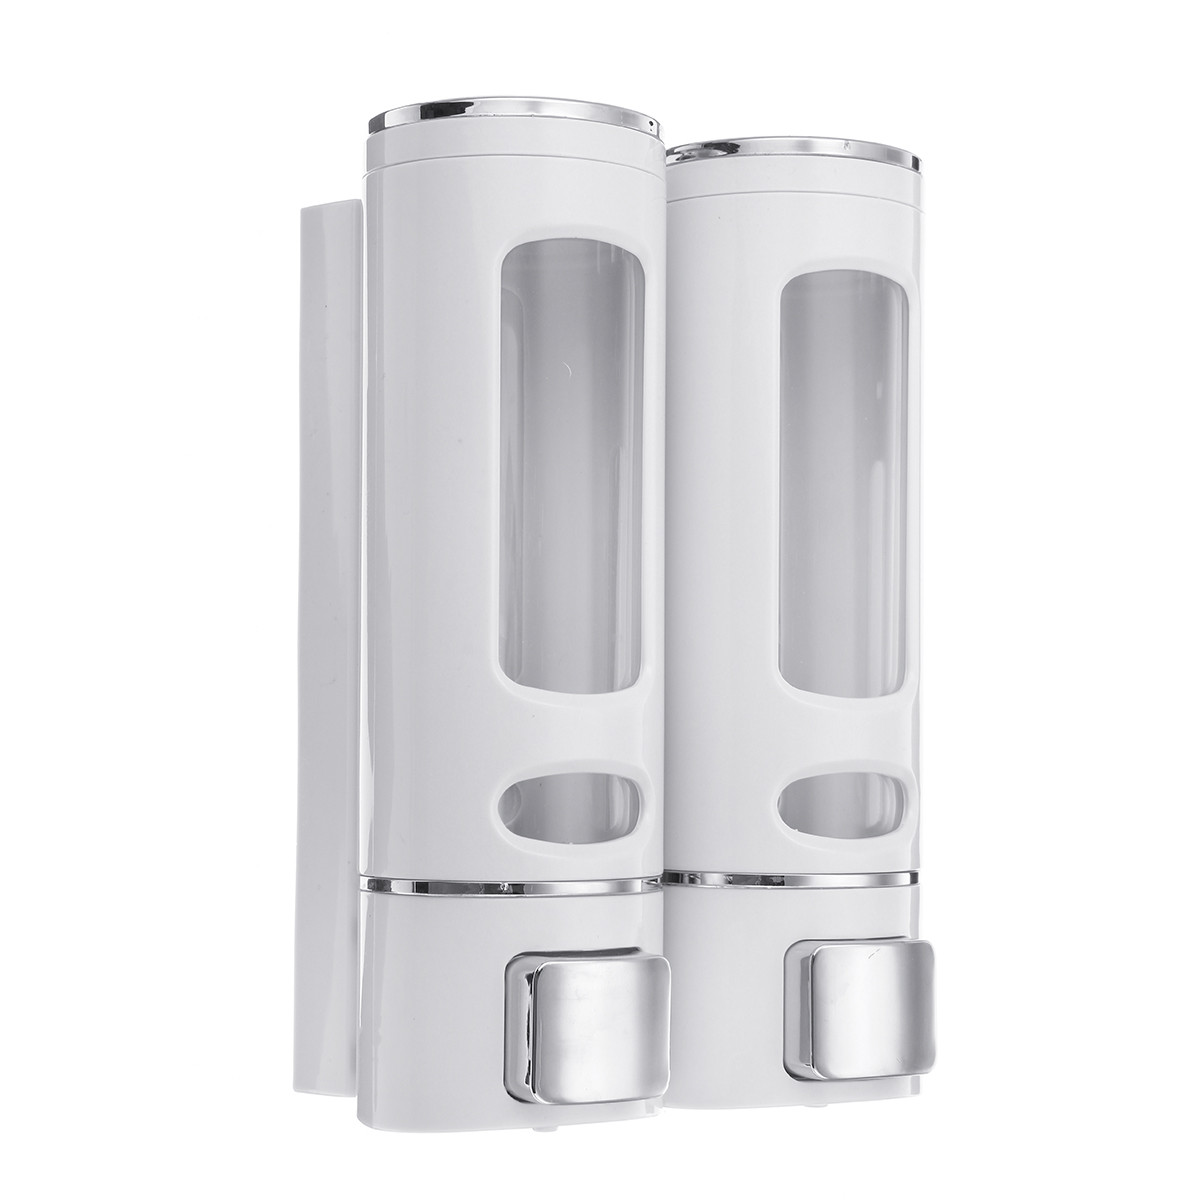 

2Pcs/Set 400ML Liquid Soap Dispenser Wall Mounted Hand Sanitizer Shower Gel Shampoo